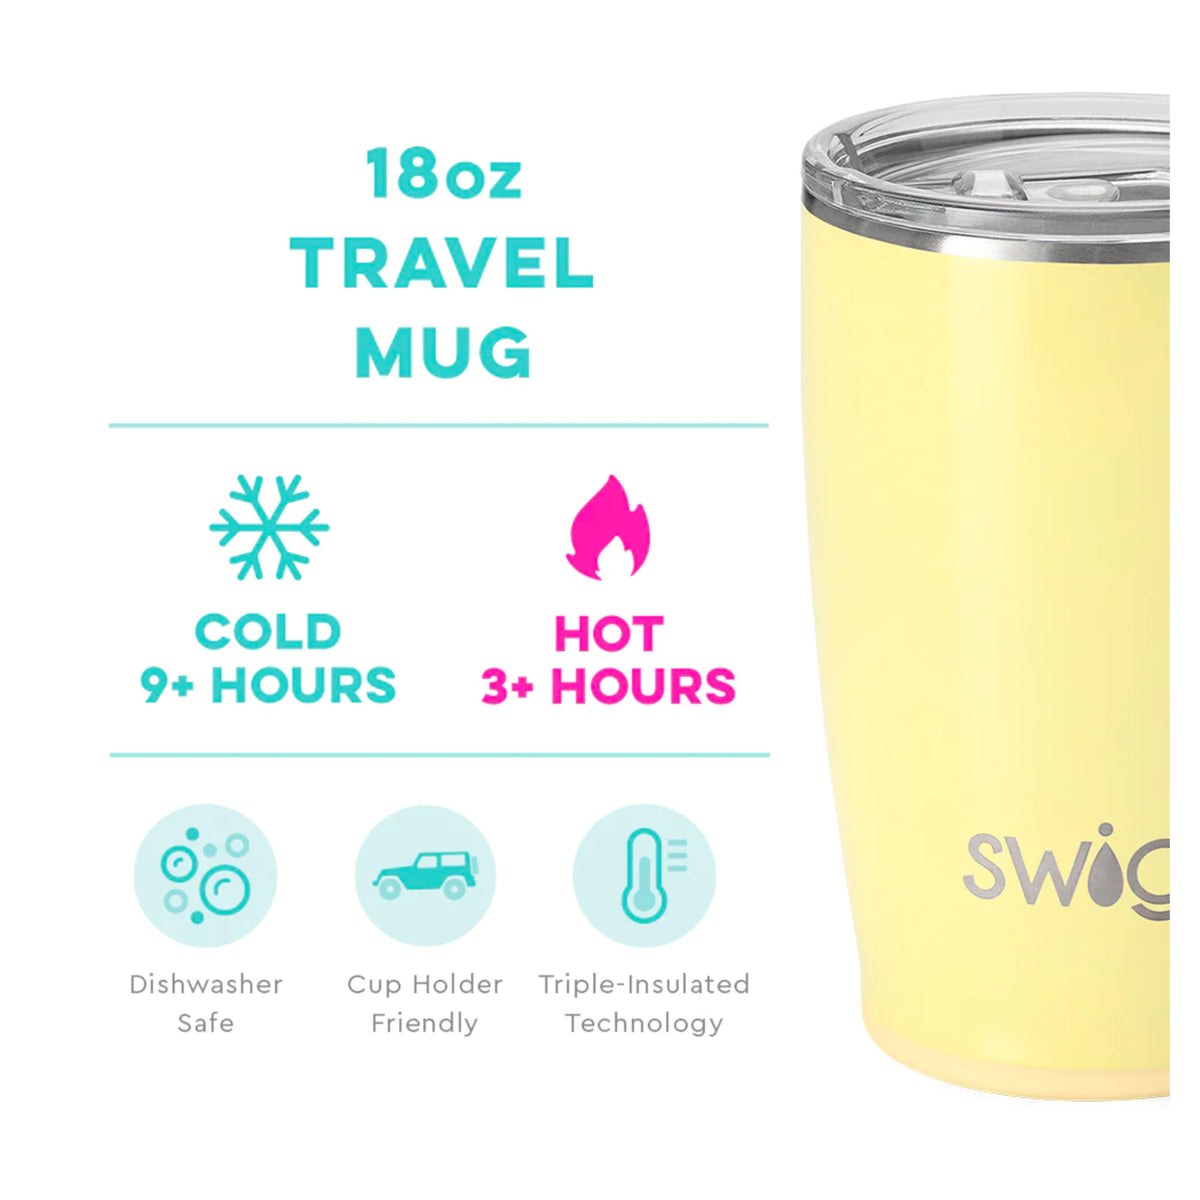 Swig Shimmer Buttercup Travel Mug (18oz)